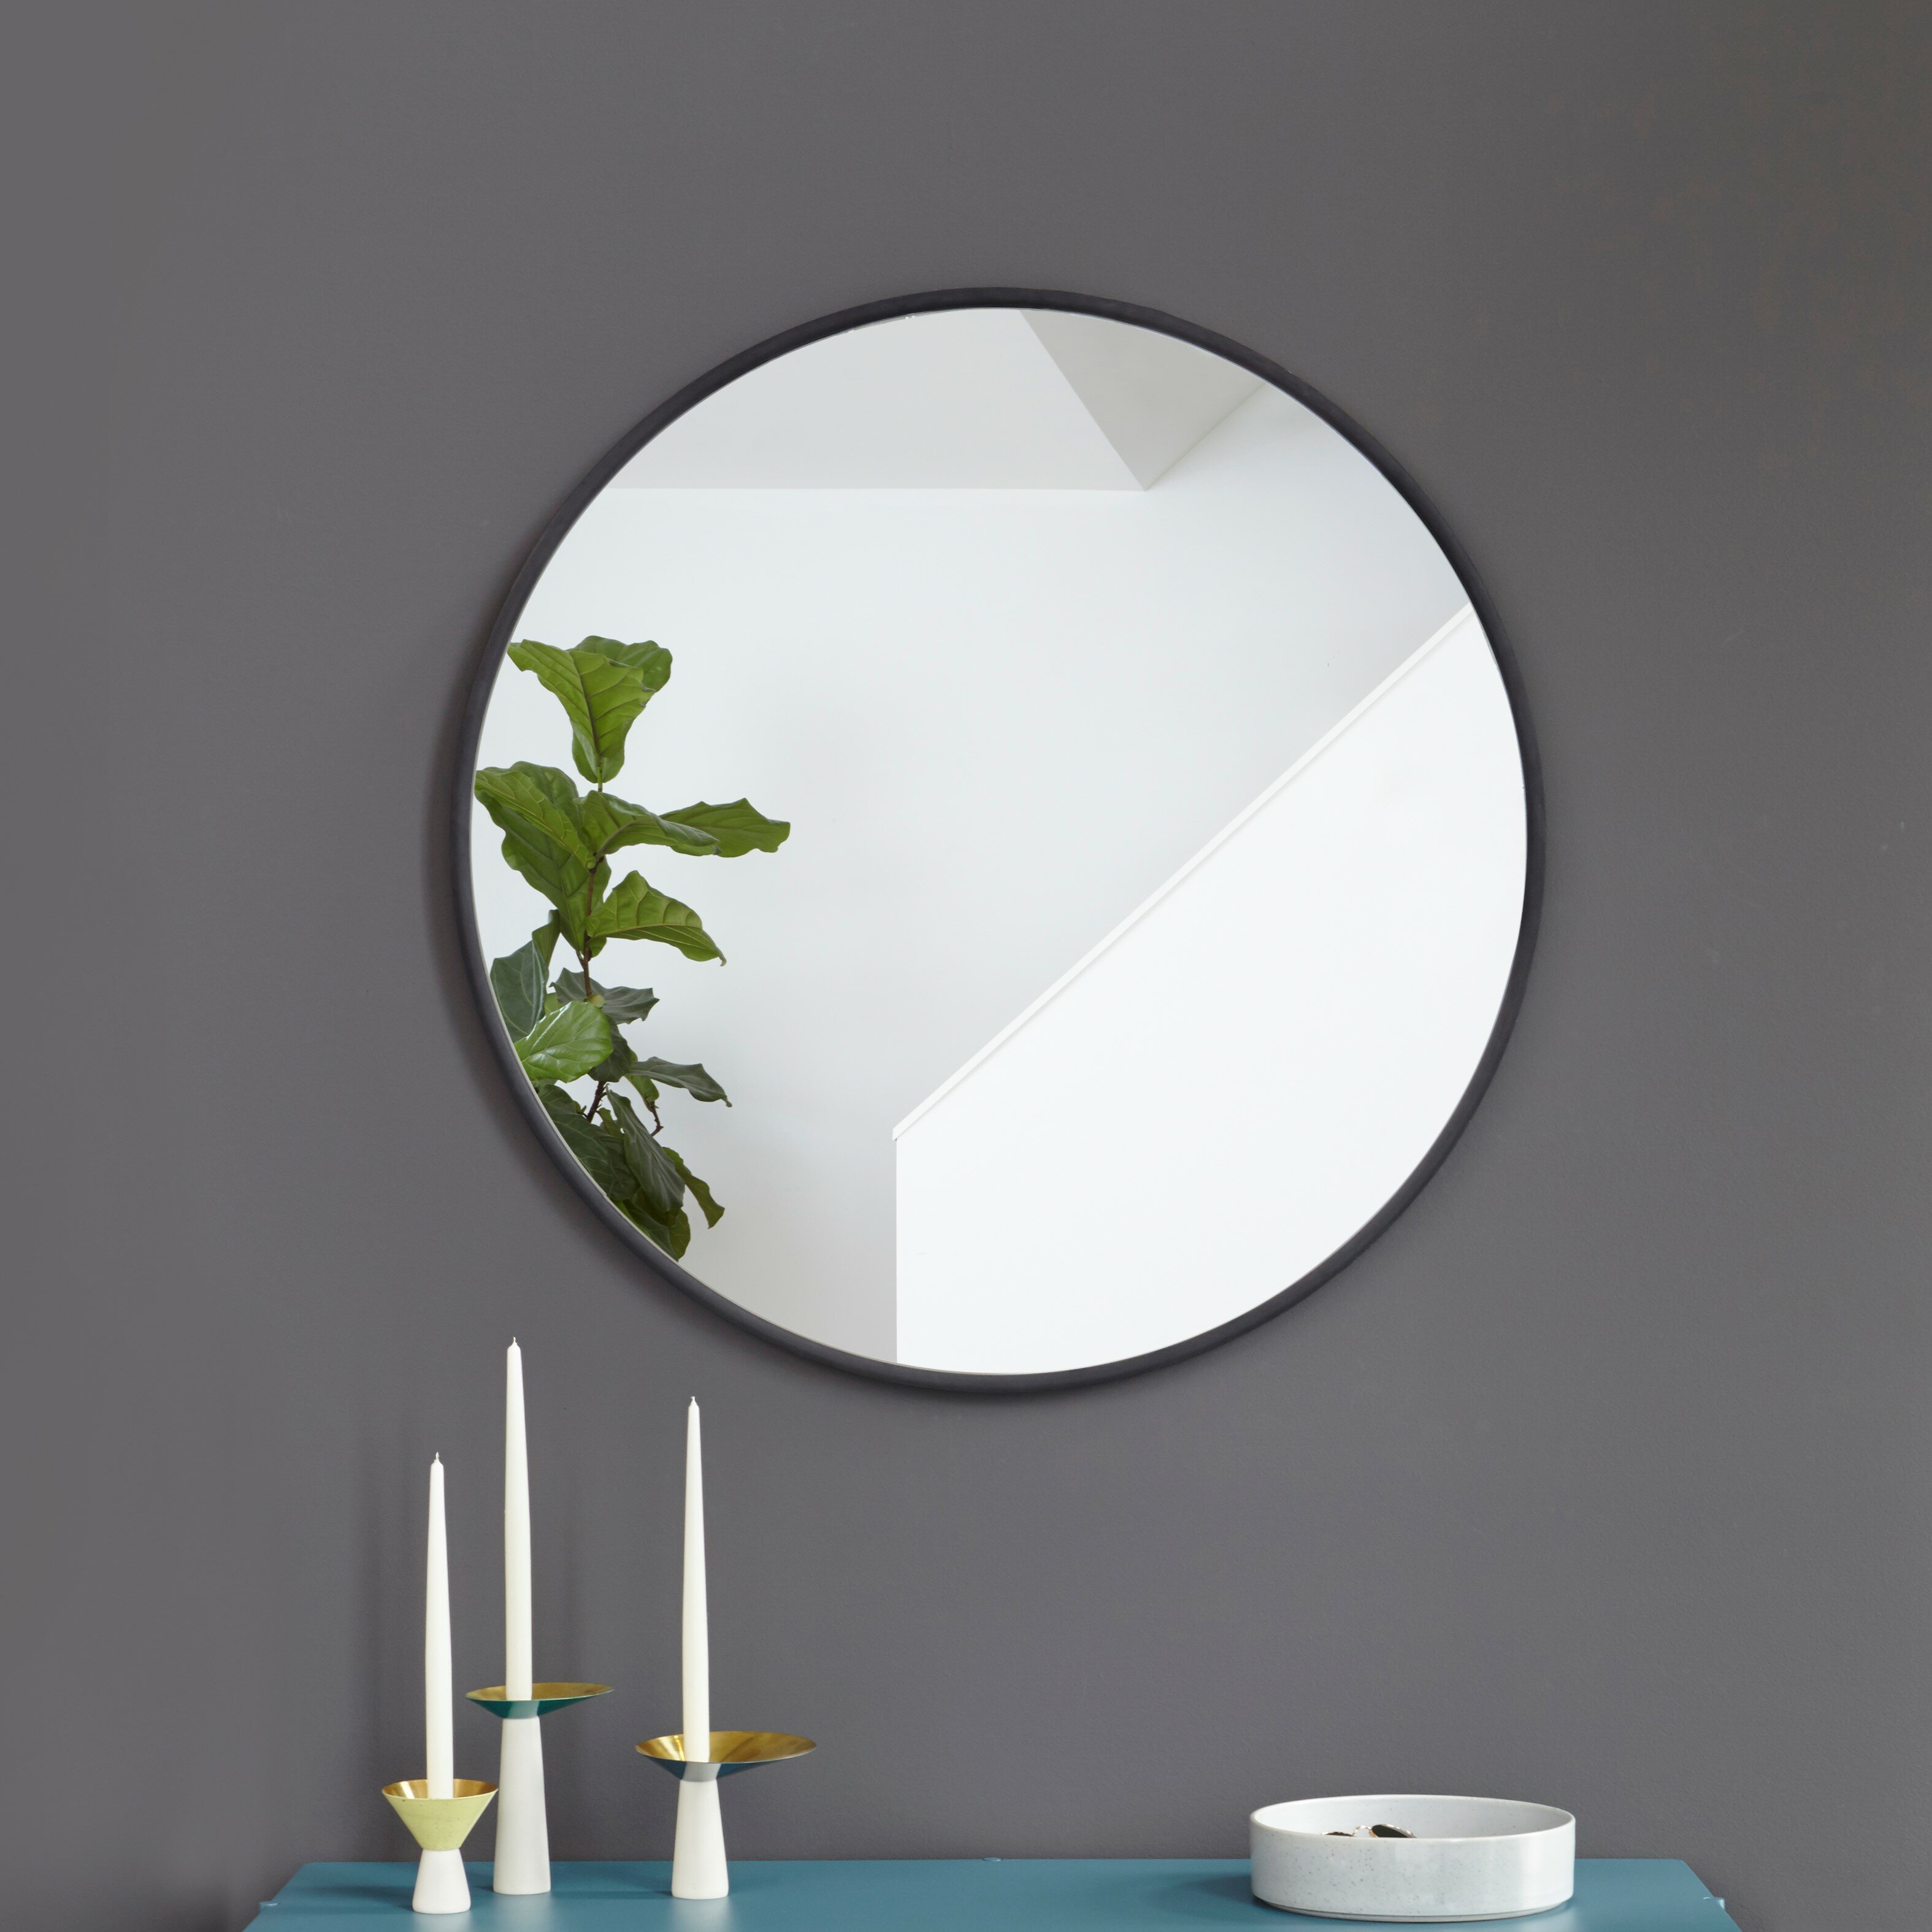 Umbra Hub Rubber Round Wall Mirror & Reviews - Wayfair Canada